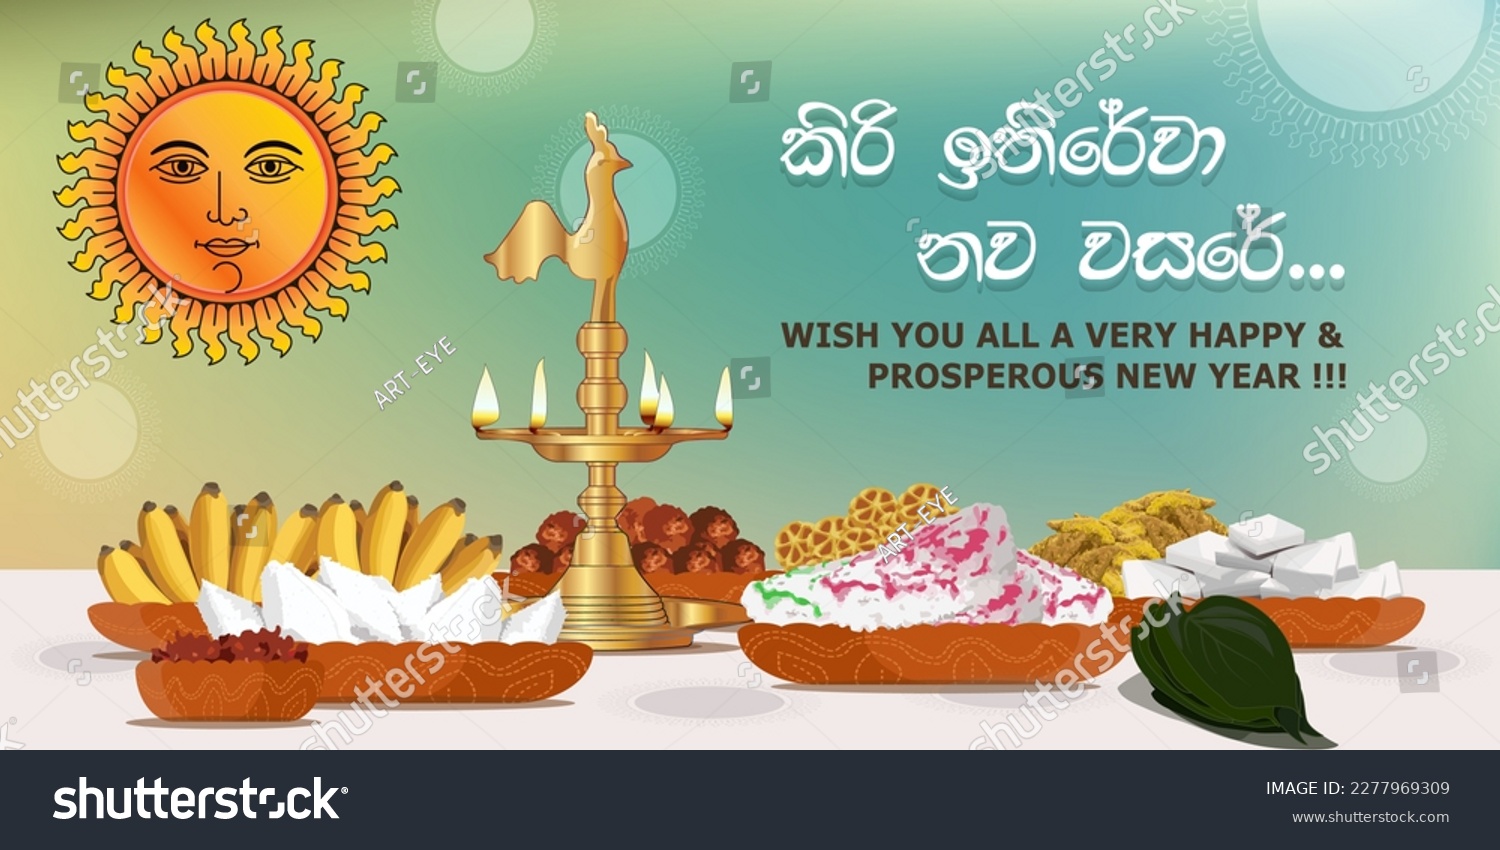 Sri Lankan Sinhala And Tamil New Year Greetings Royalty Free Stock